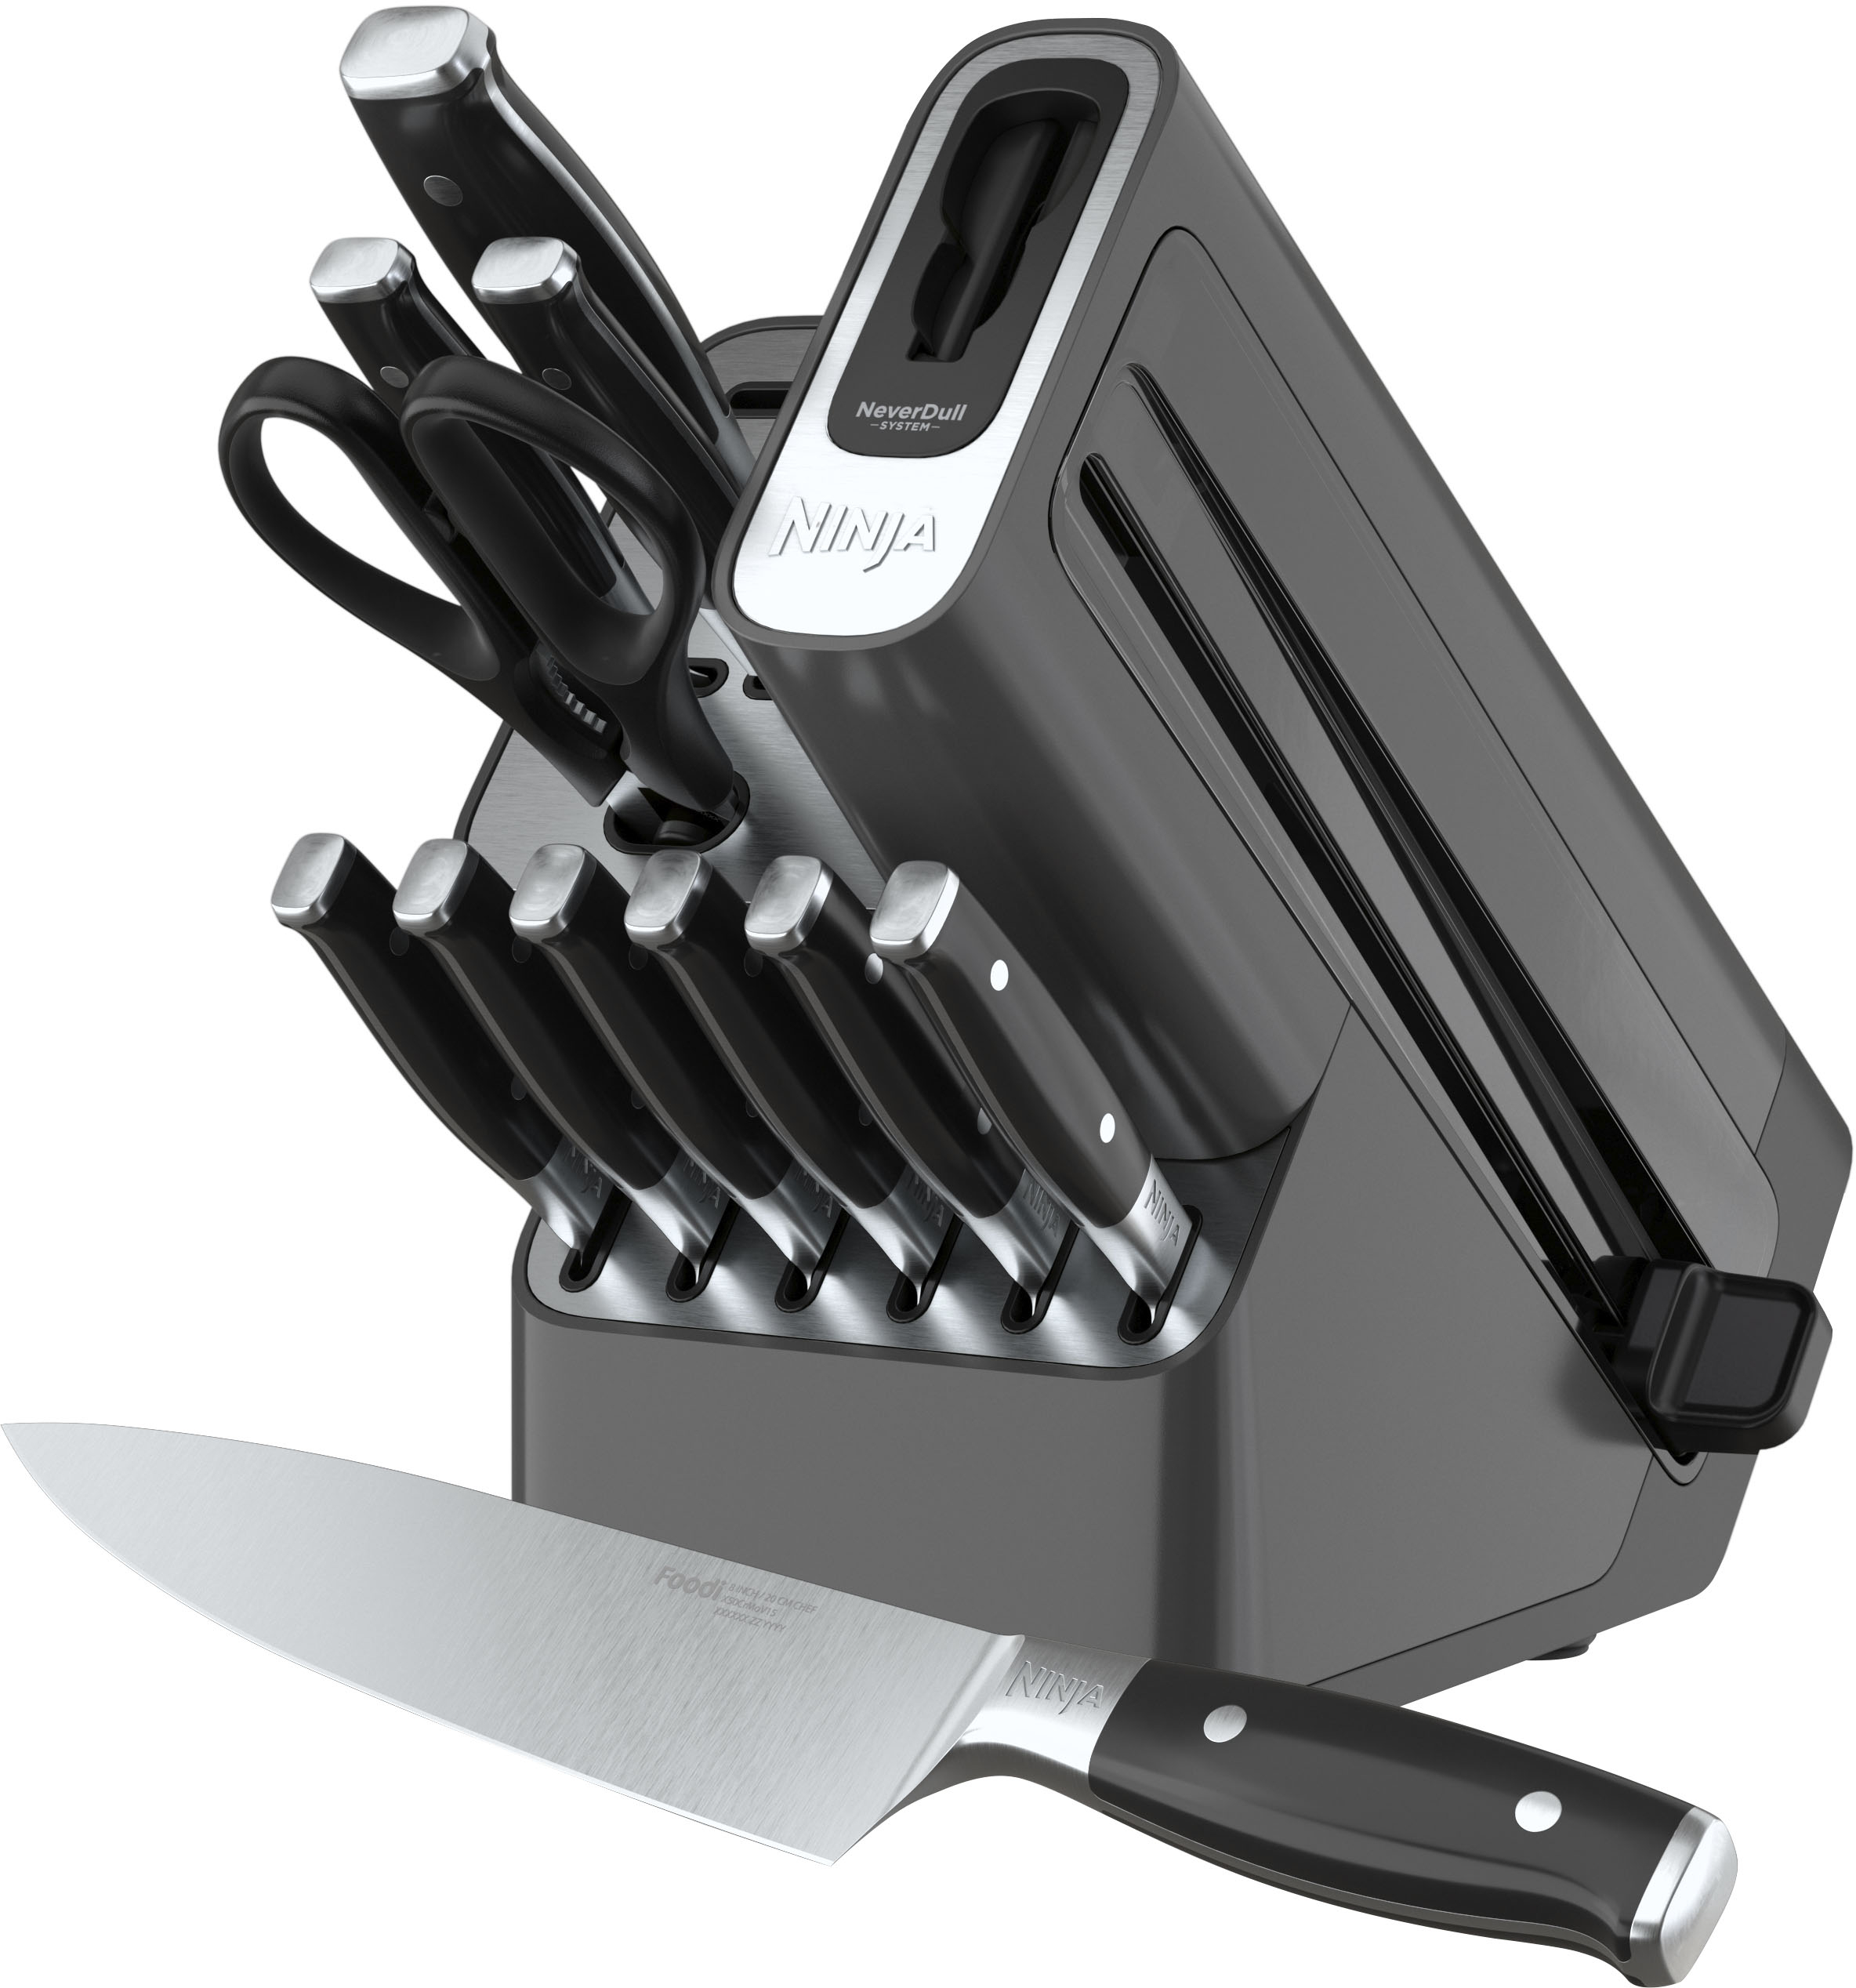 Forged Knives, Knife Block Set, 12 pc Knife Set